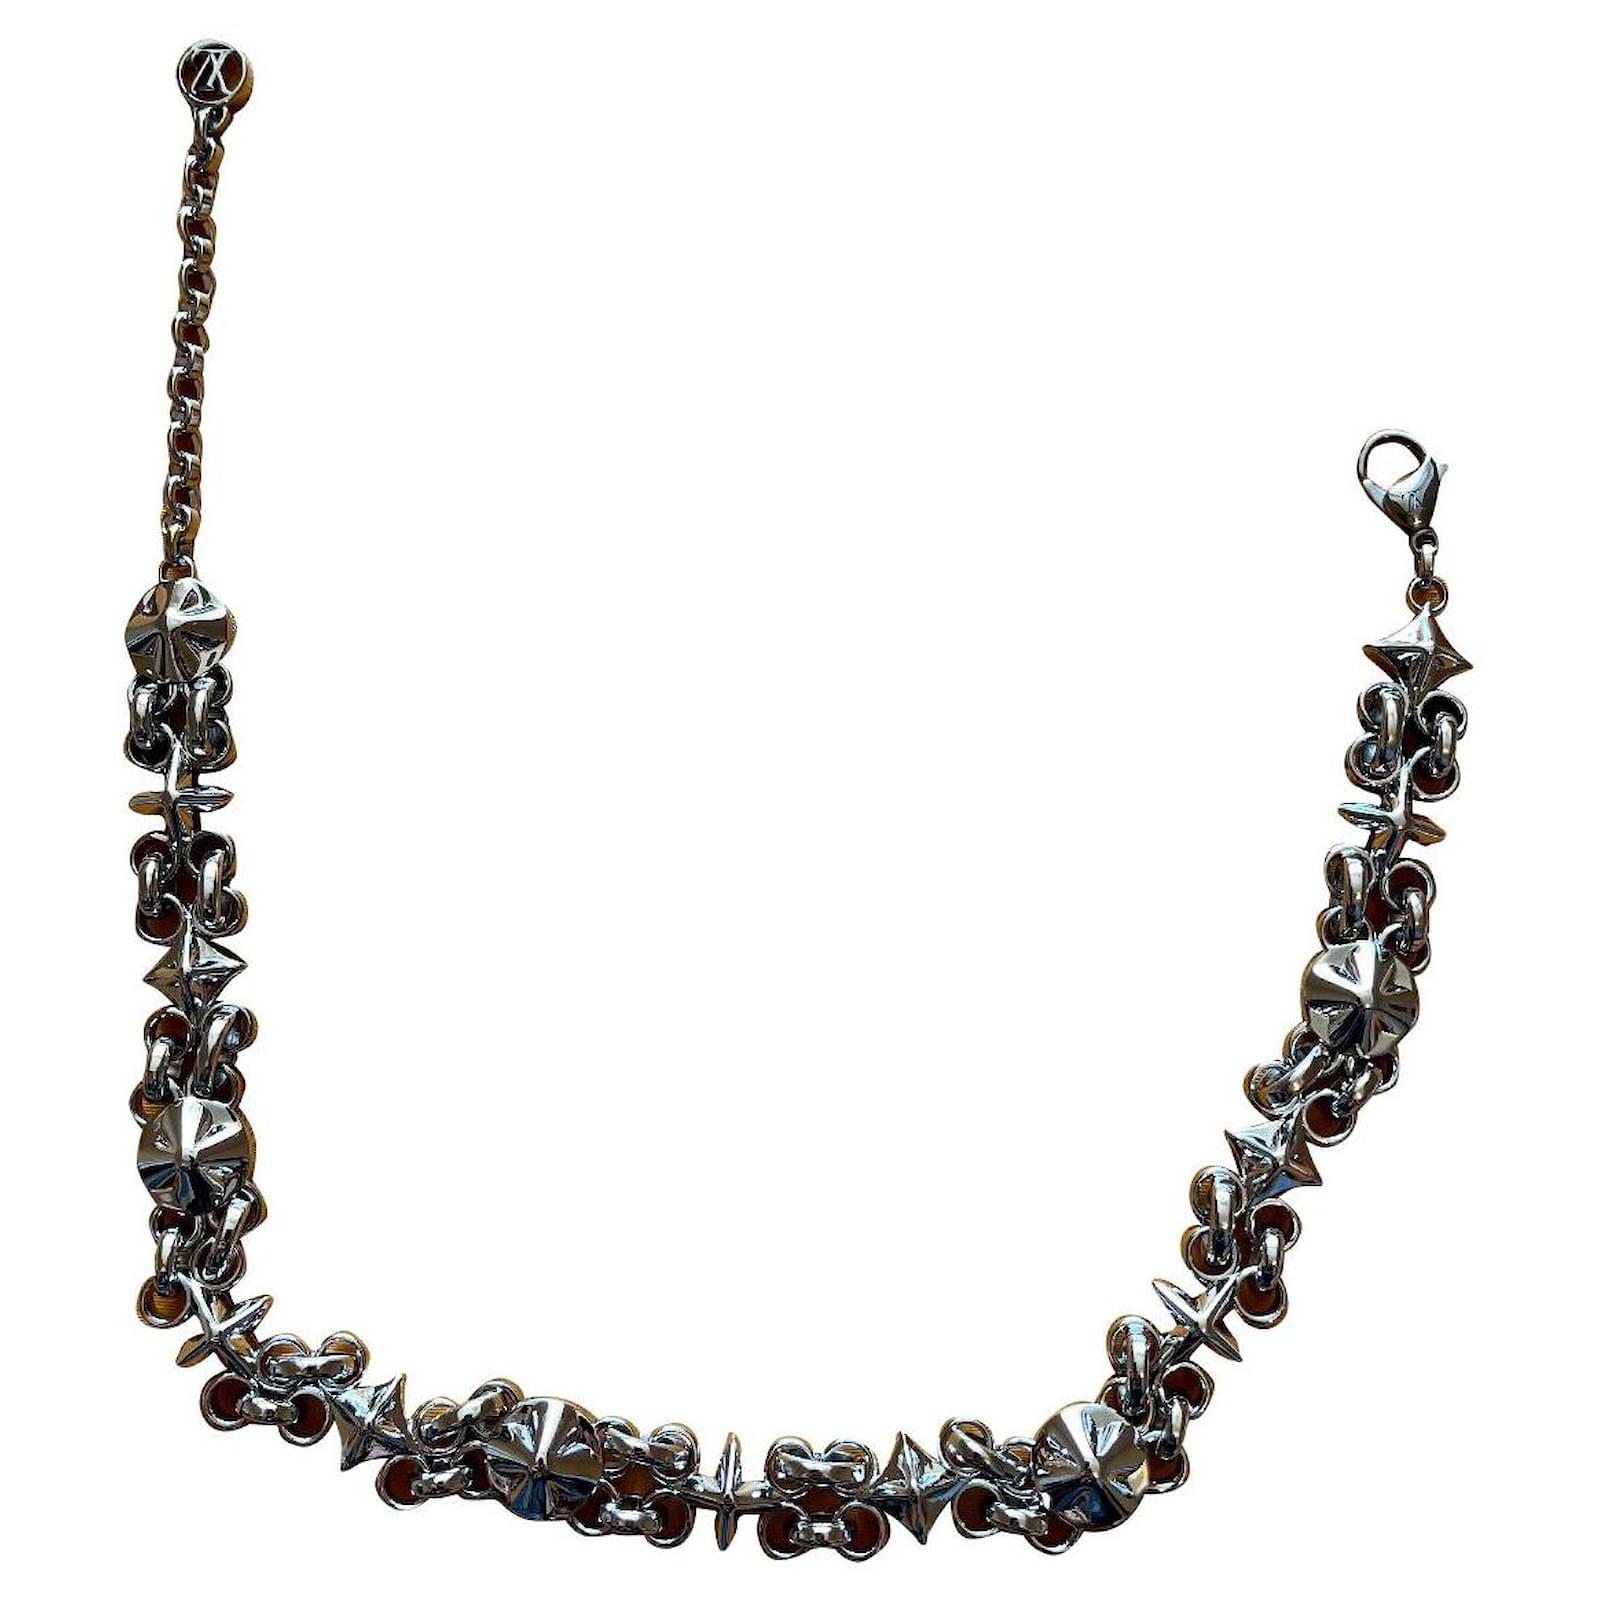 Louis Vuitton - My Flower Chain Necklace - Metal - Golden - Women - Luxury